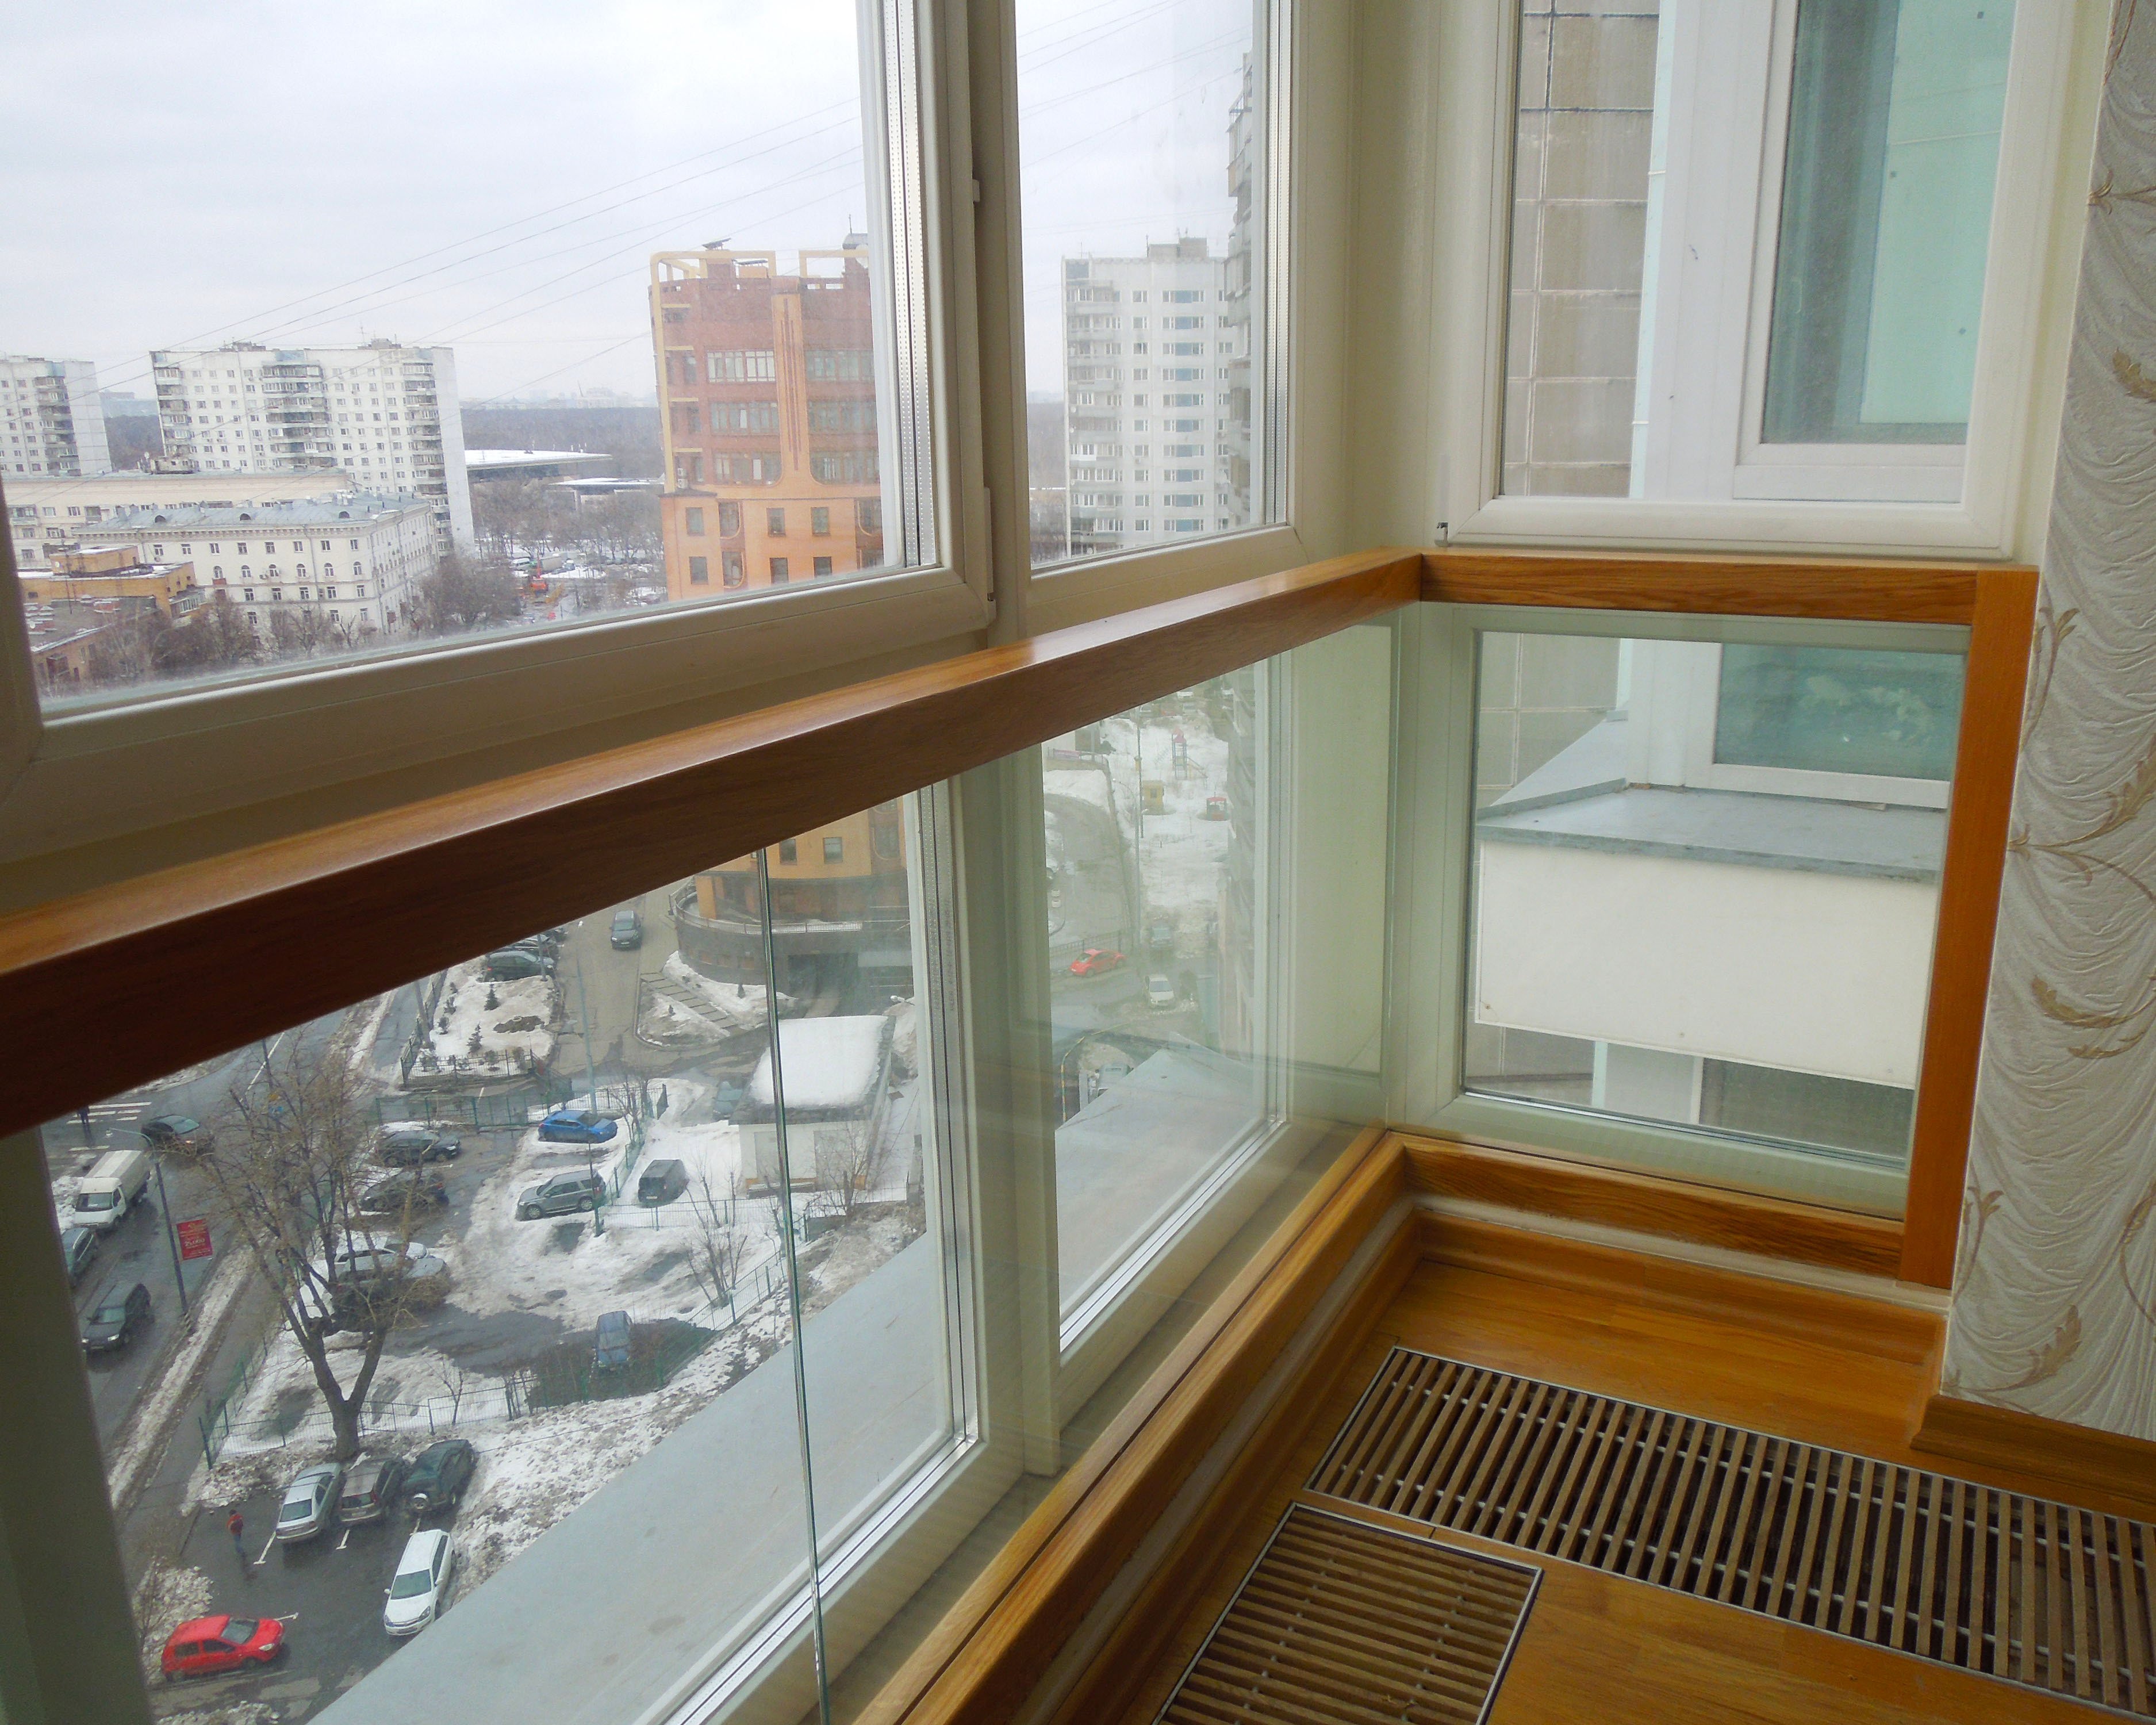 Подоконник на балконе на окно. Французское панорамное остекление балкона п44. Ограждение на лоджии с панорамным остеклением. Стеклянный балкон. Панорамные окна на балконе.